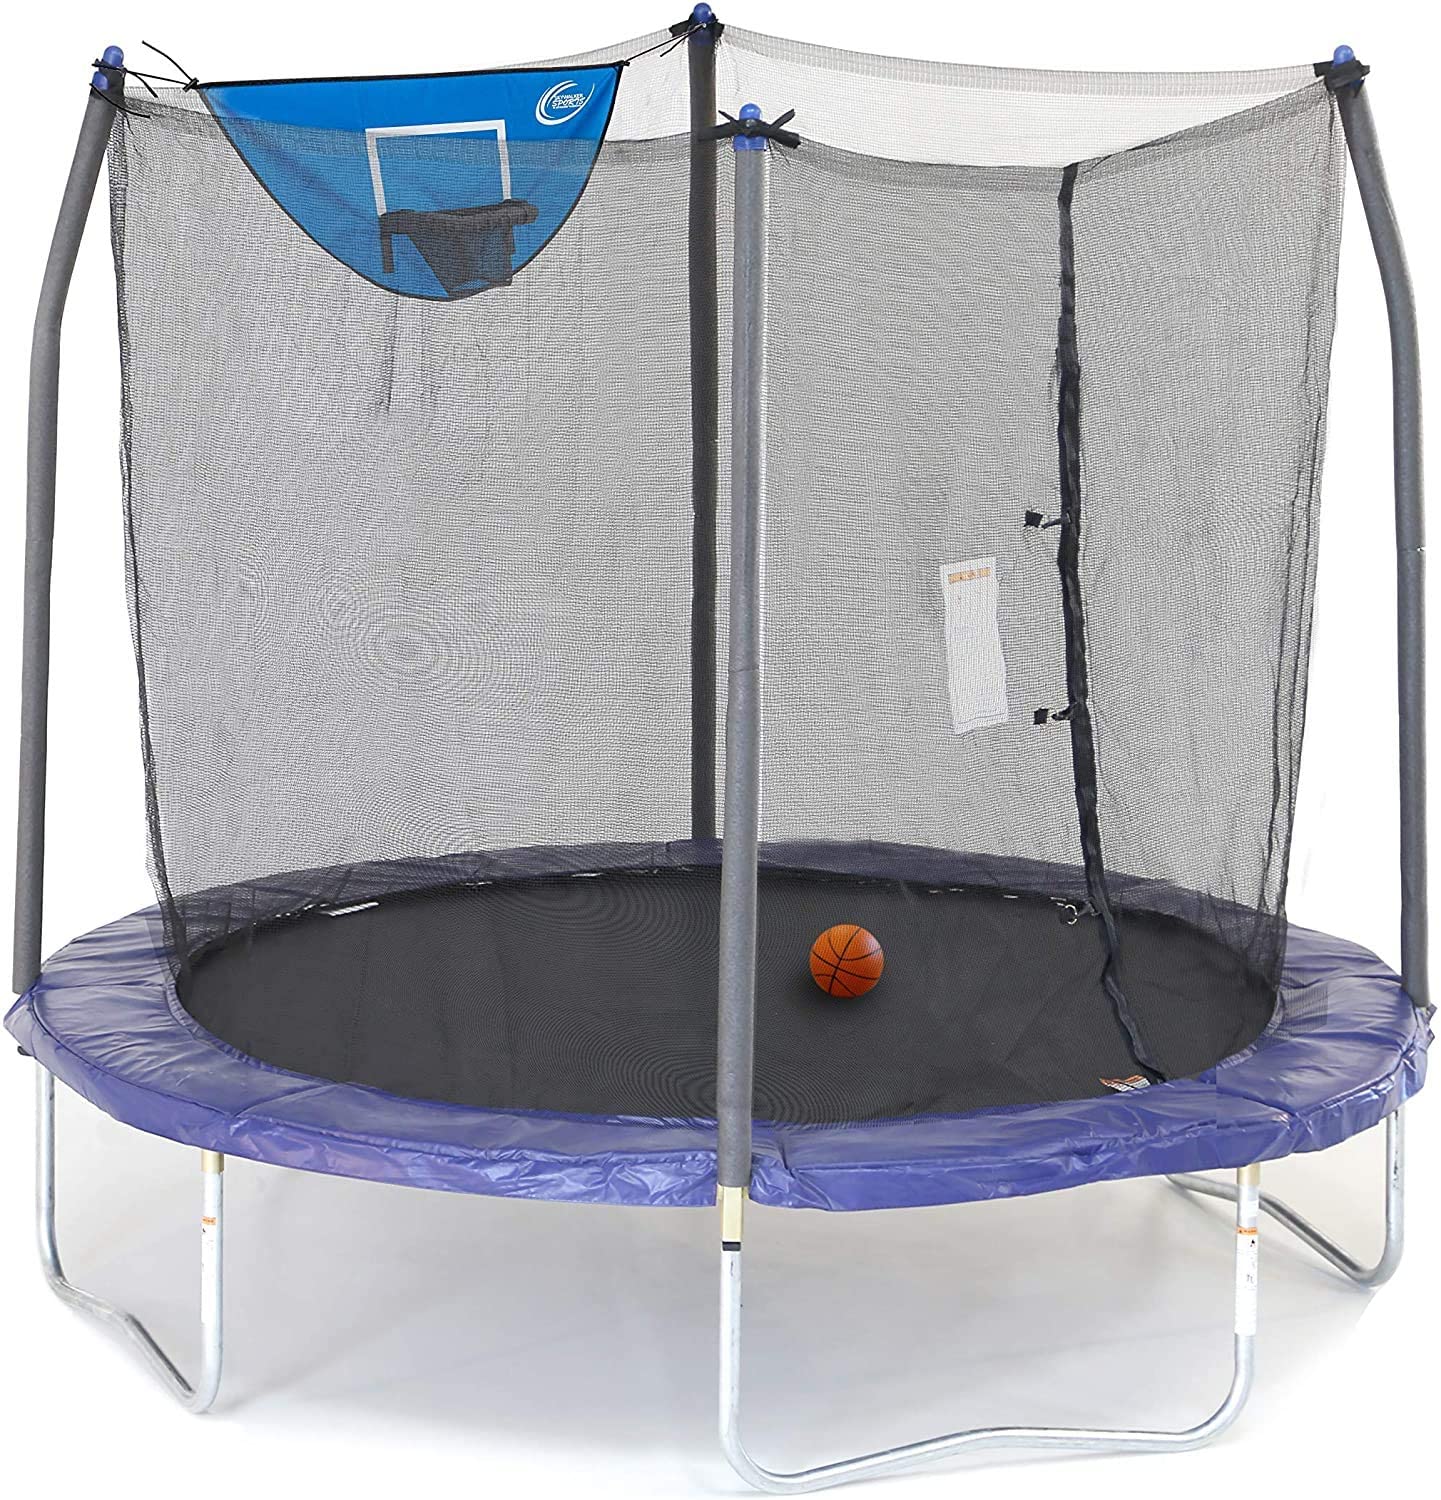 8' Skywalker Trampolines Jump N’ Dunk Trampoline w/ Enclosure Net (Blue) $114.30 + Free Shipping